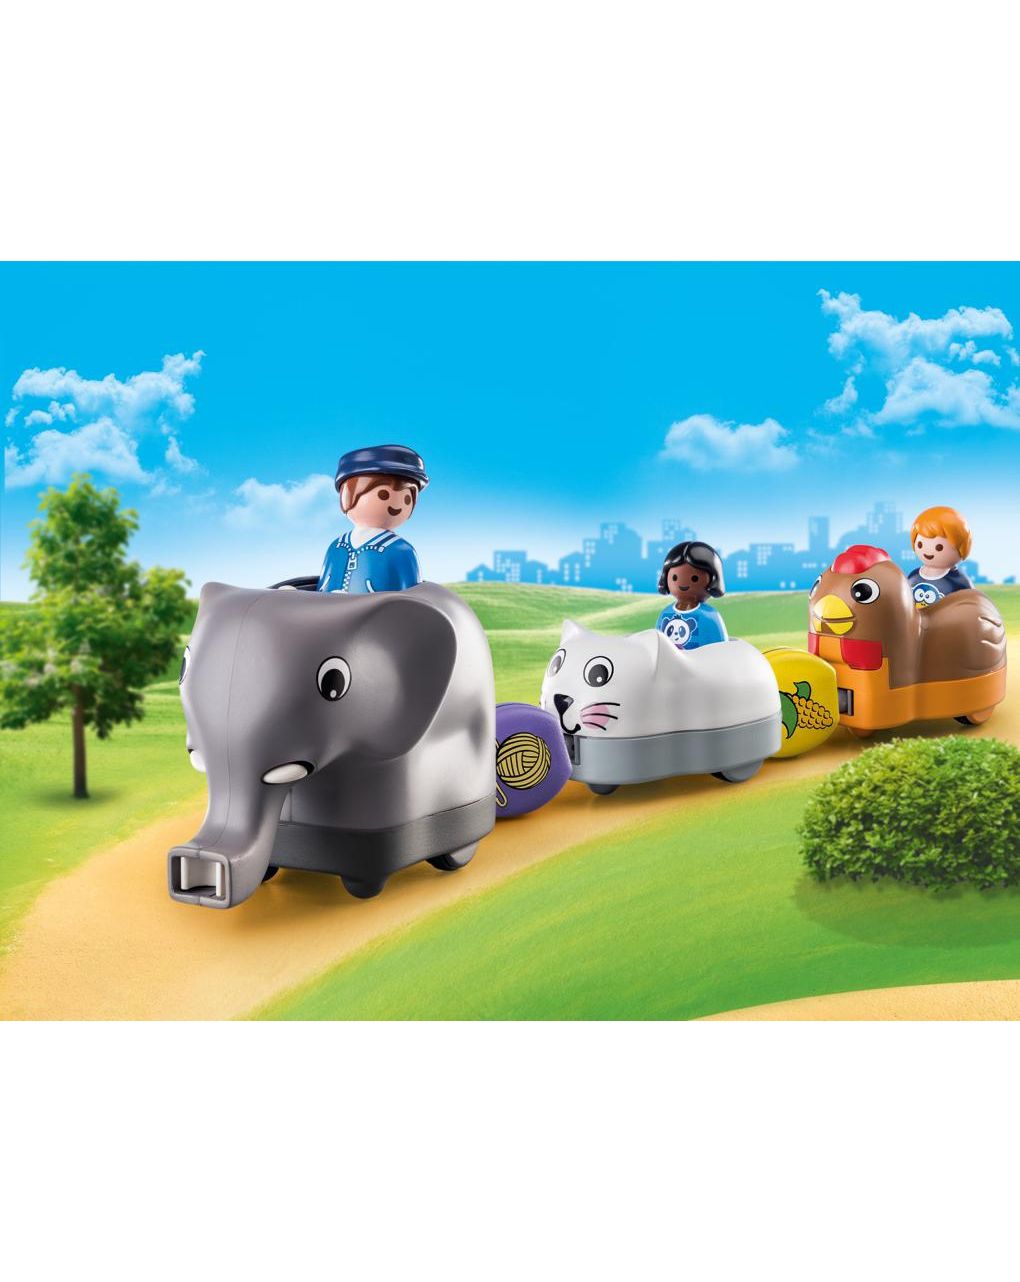 Playmobil - trem animal 1.2.3 - Playmobil